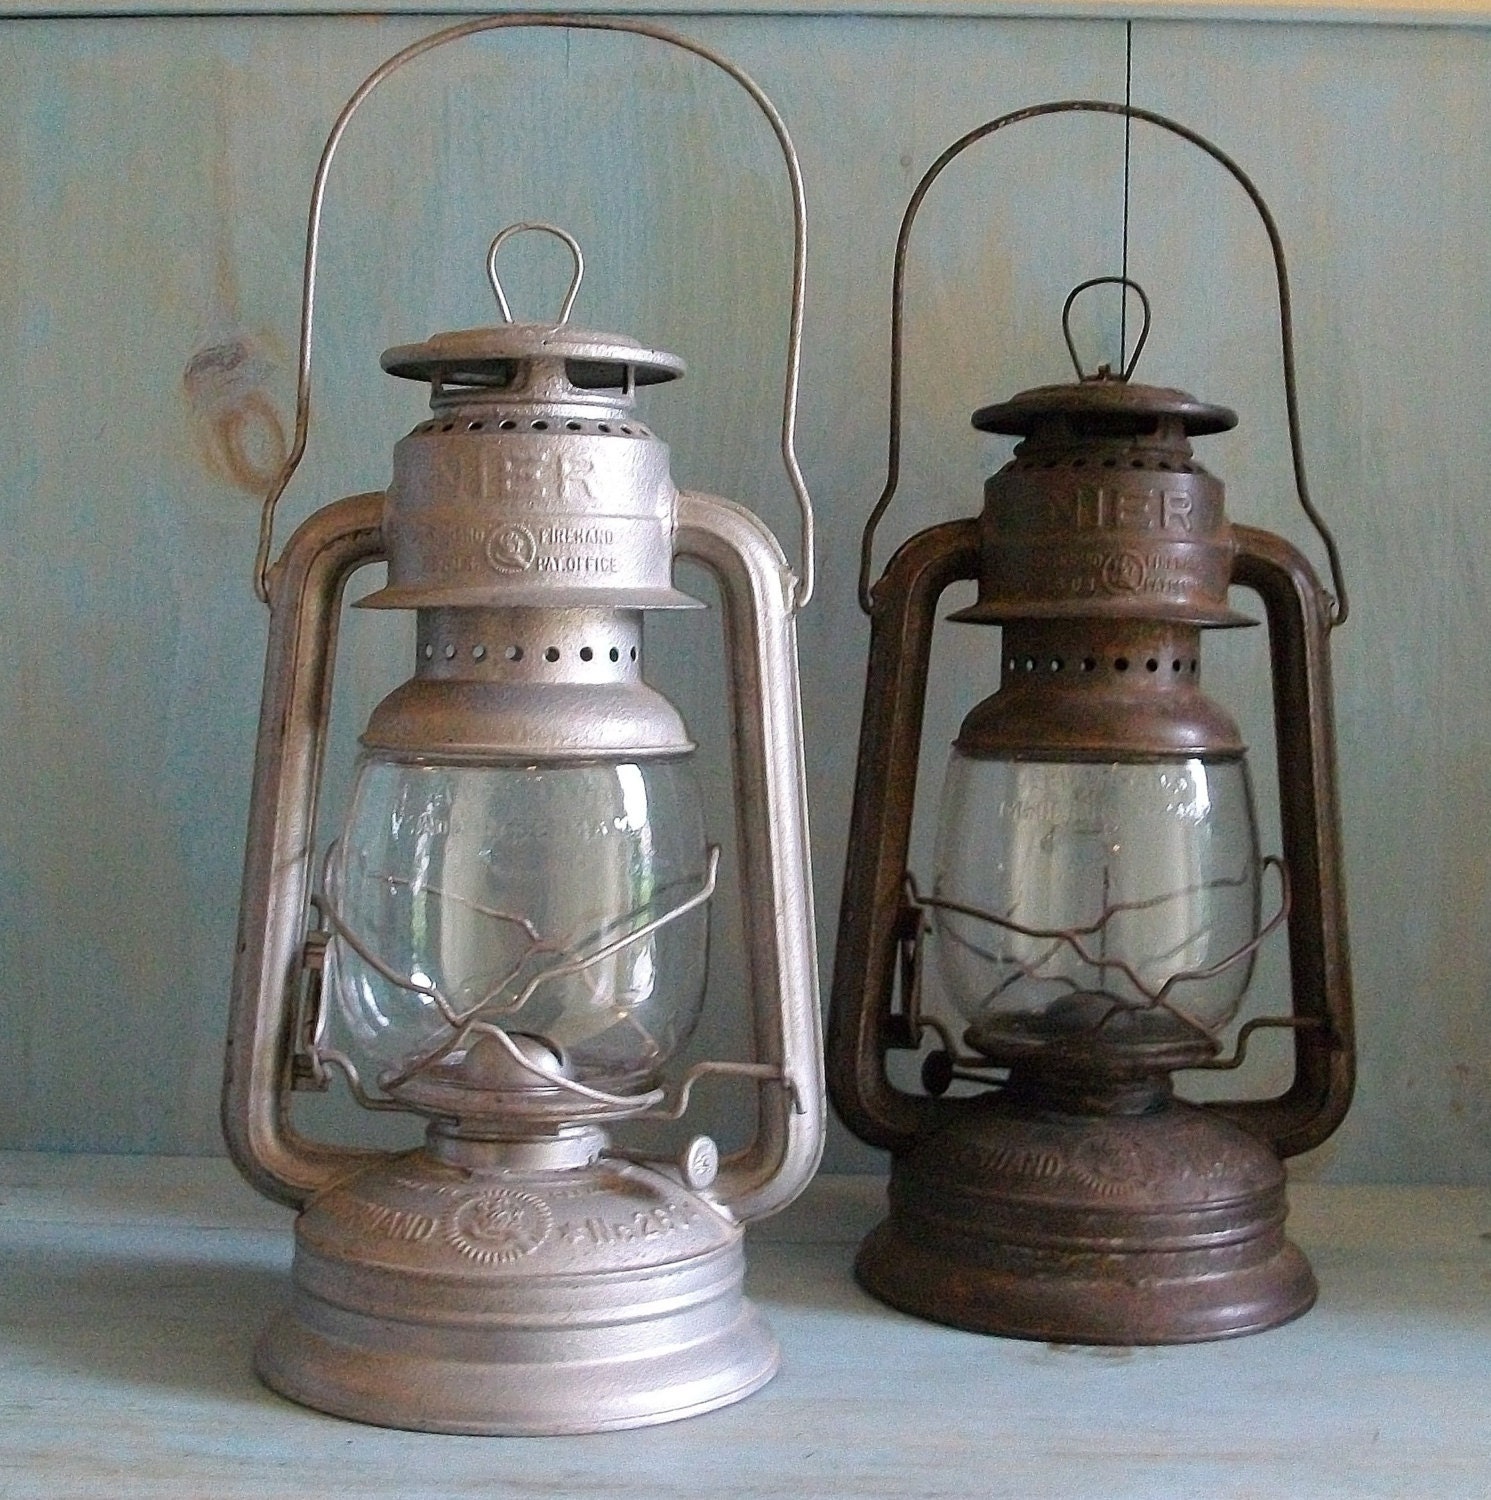 oil lantern